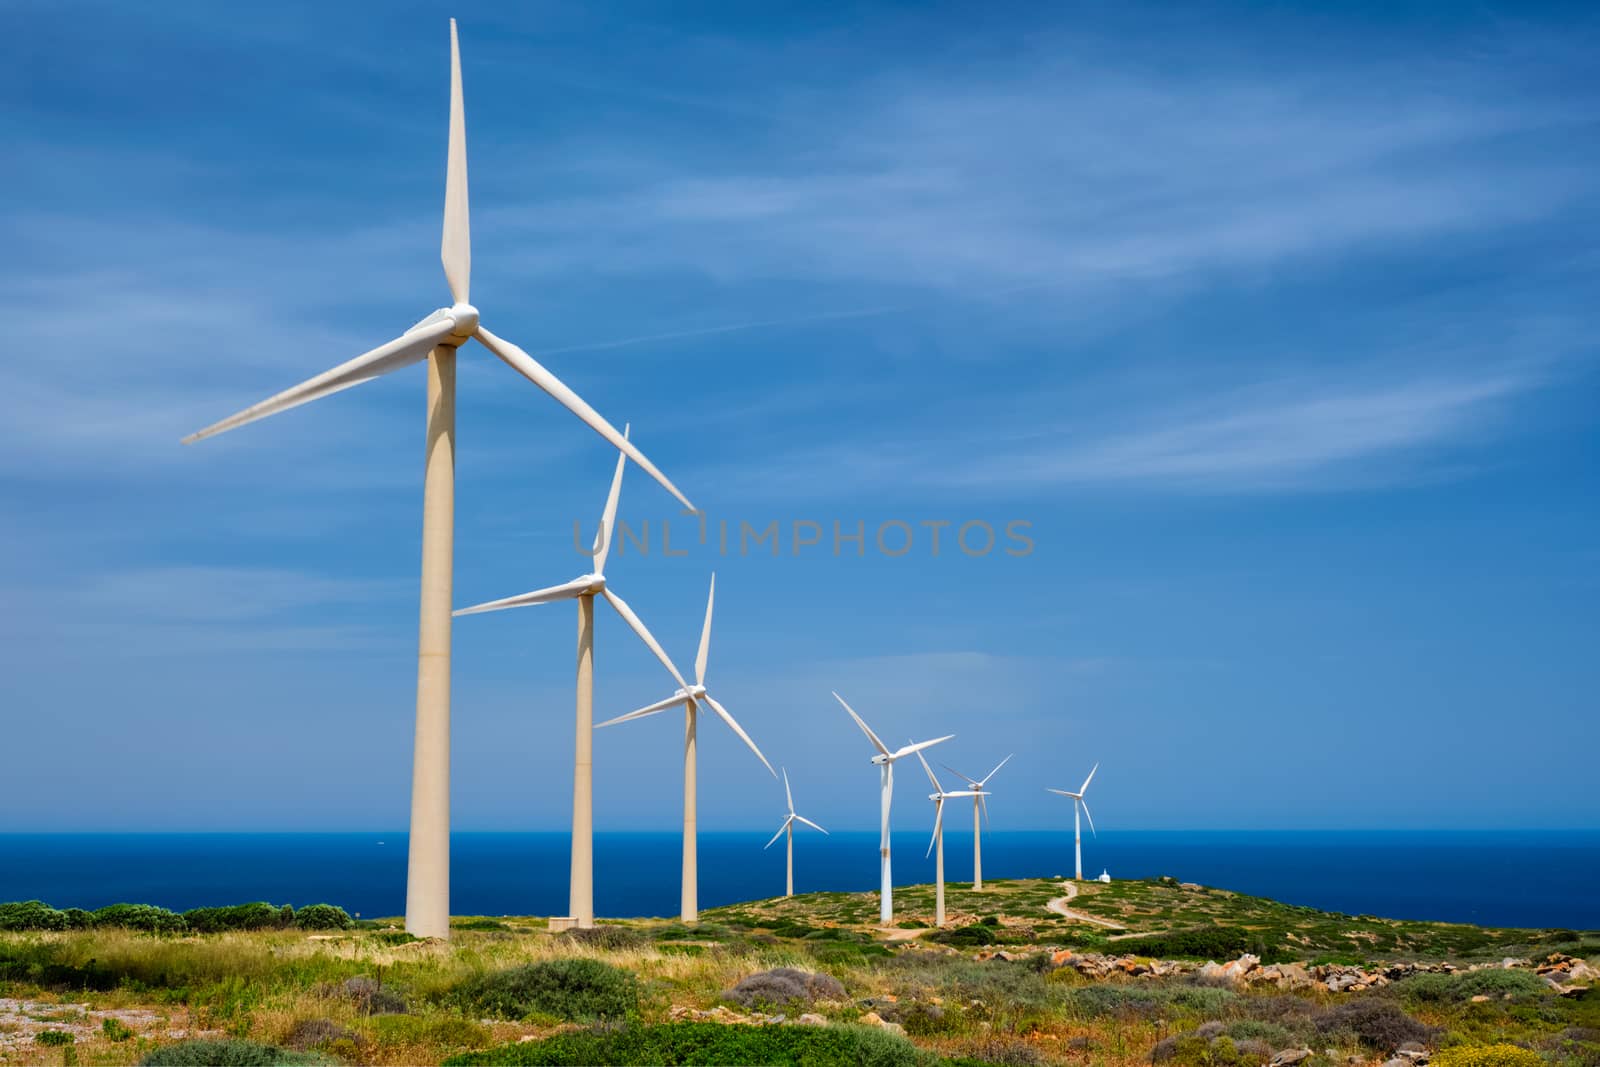 Wind generator turbines. Crete island, Greece by dimol